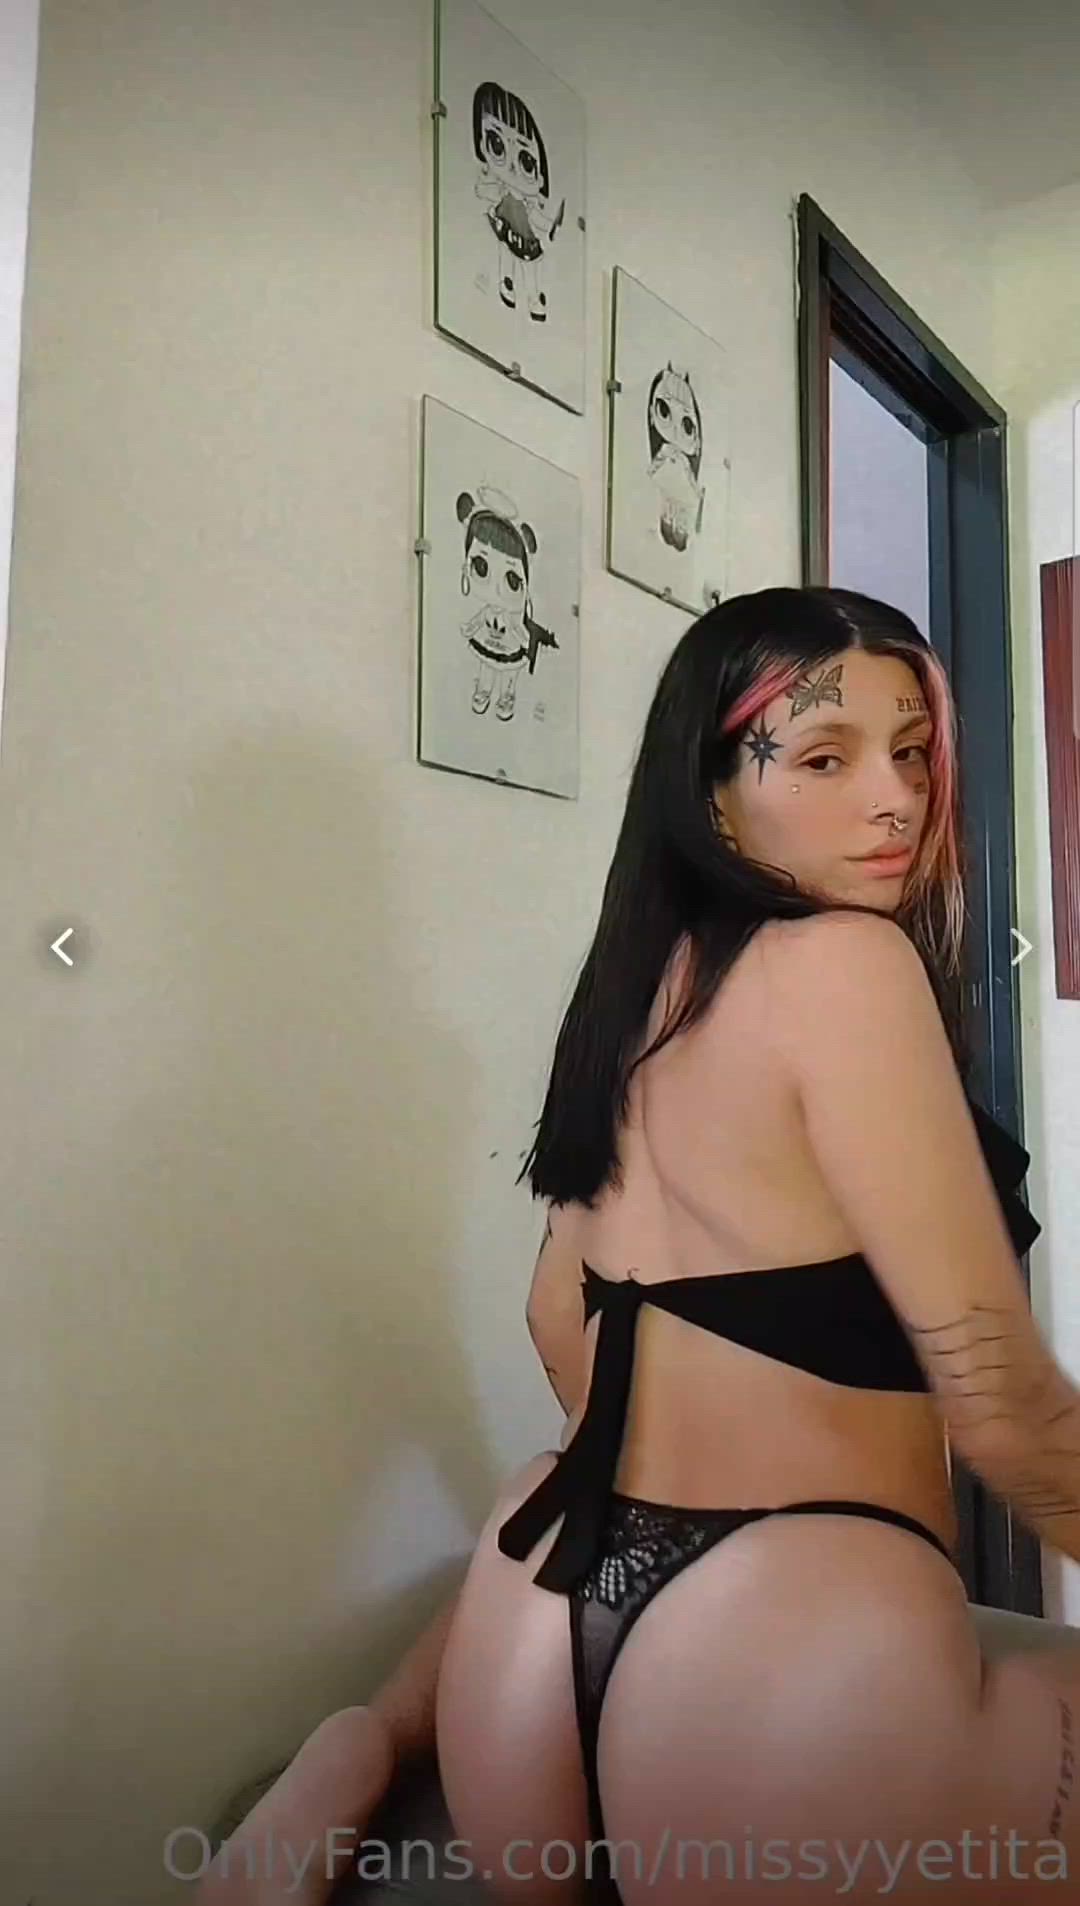 Ass porn video with onlyfans model missyyetita <strong>@missyyetita</strong>